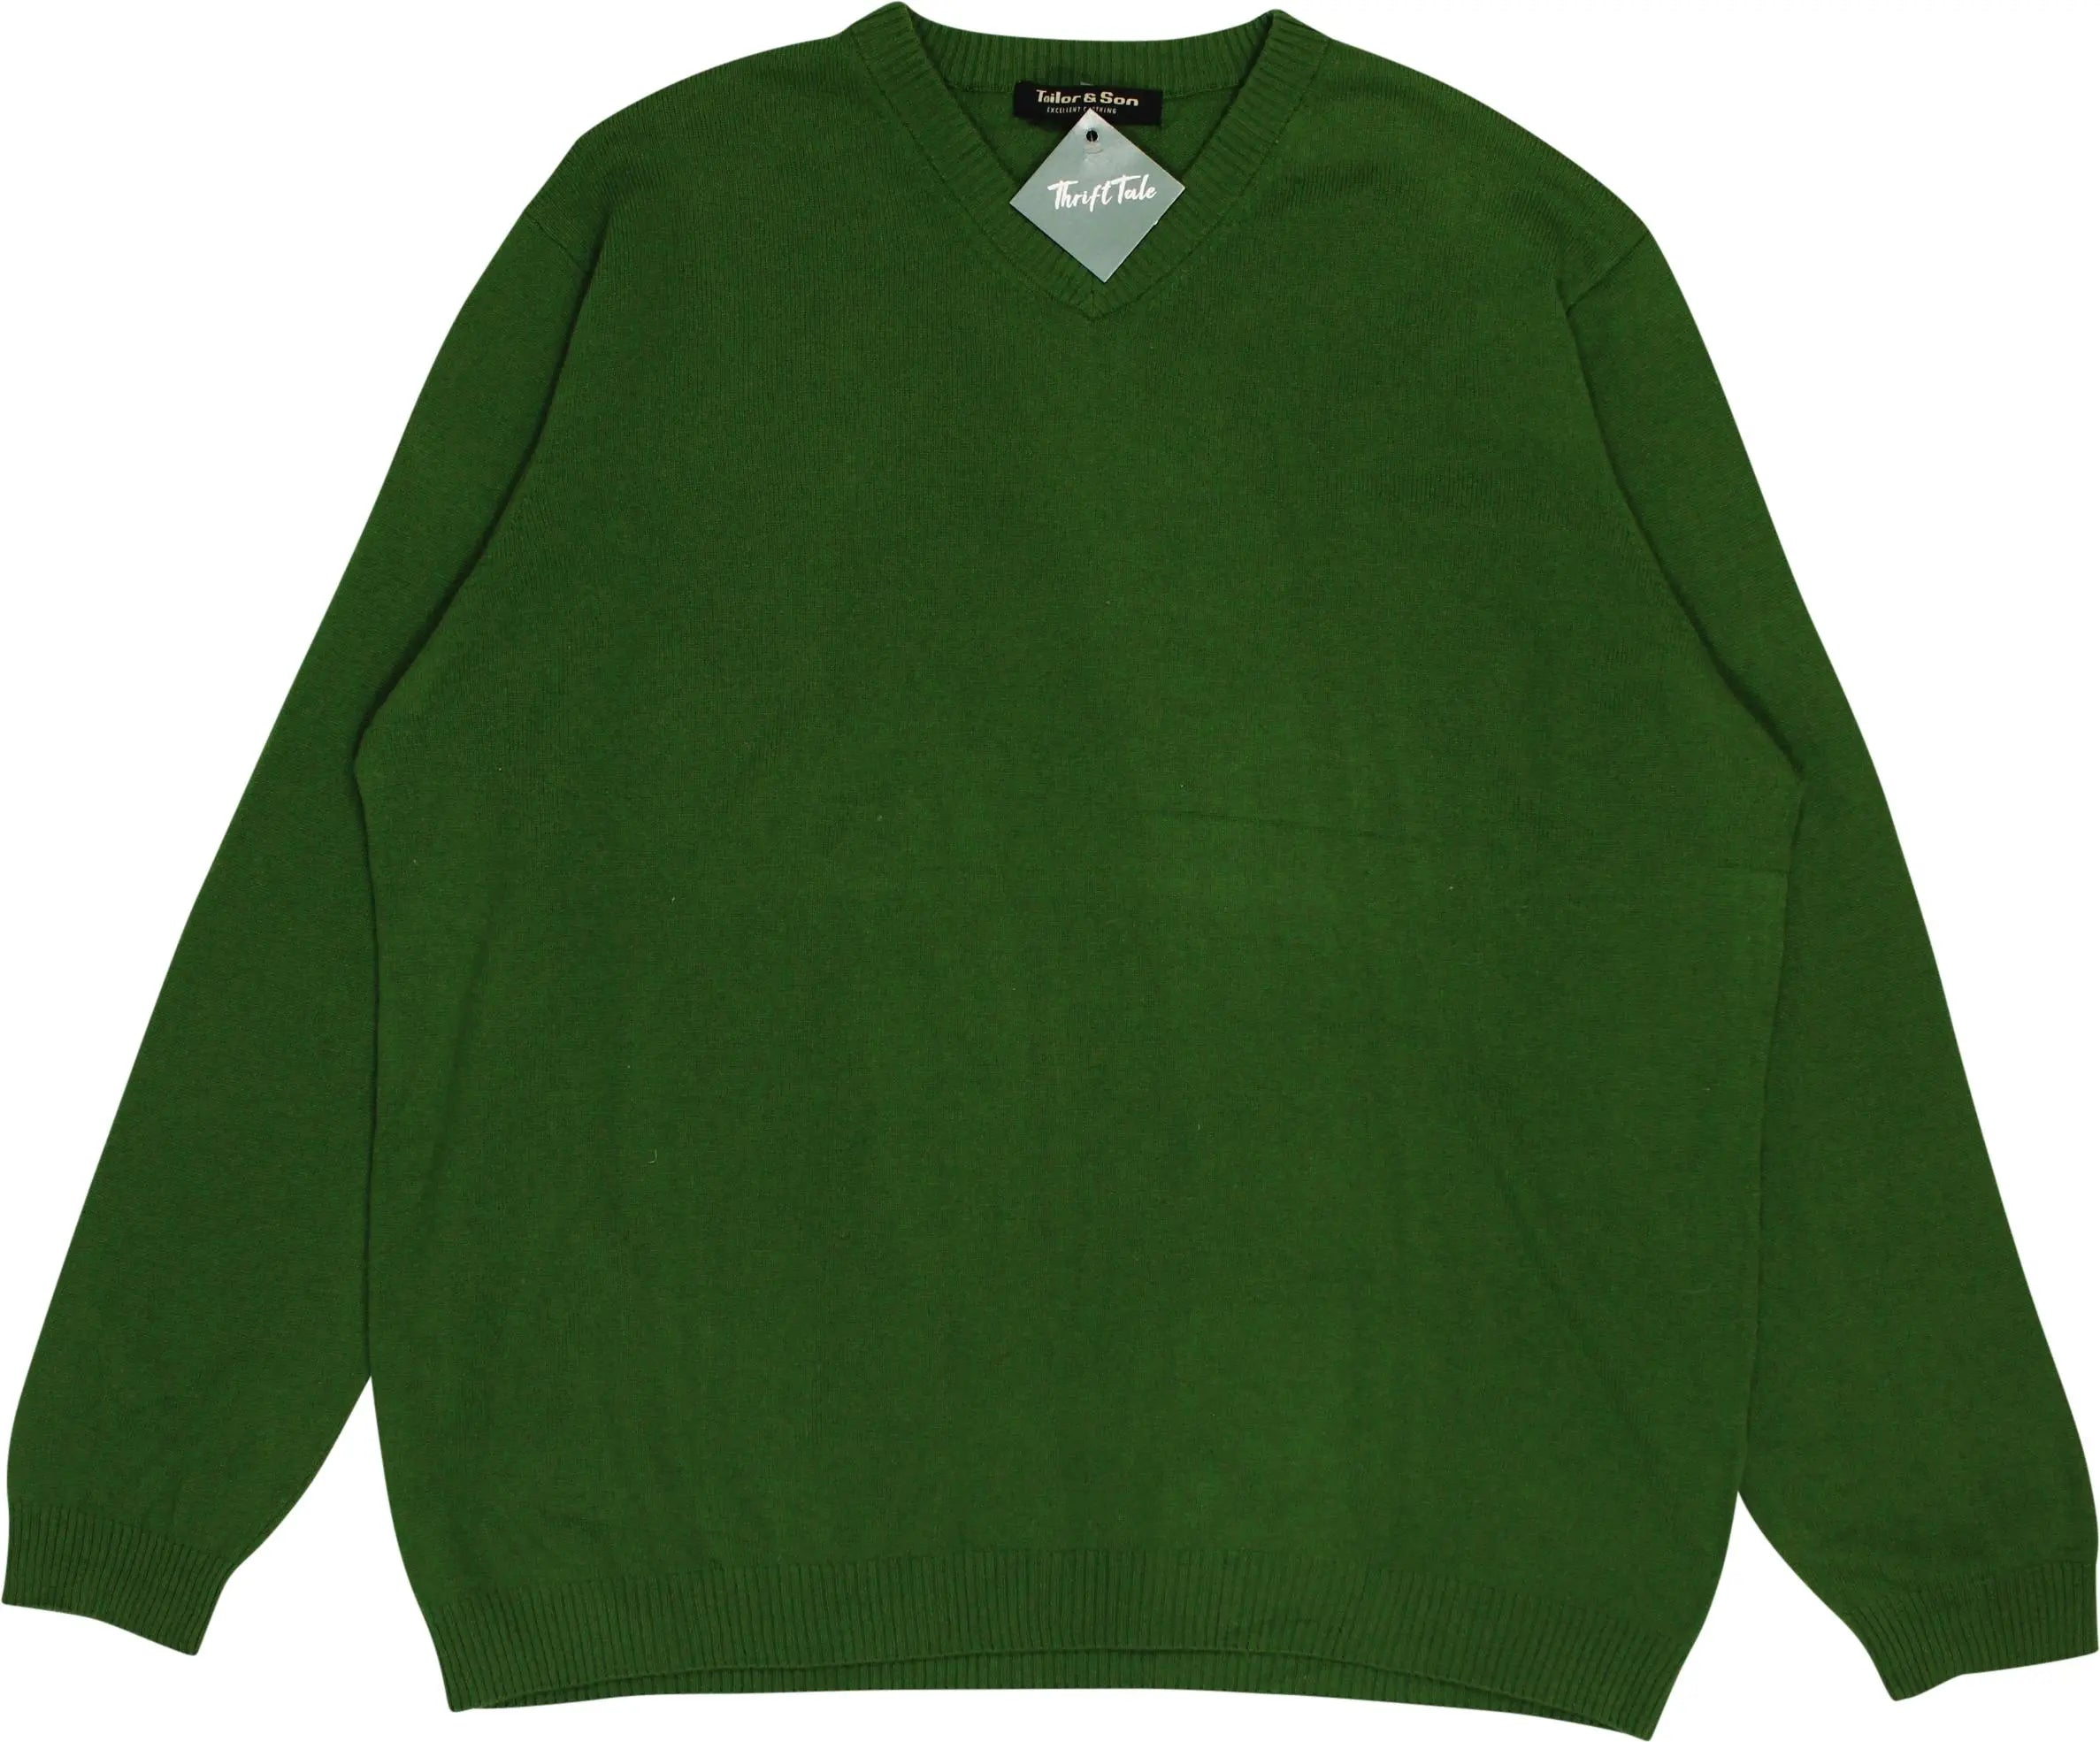 Tailor & Son - Green V-neck Jumper- ThriftTale.com - Vintage and second handclothing